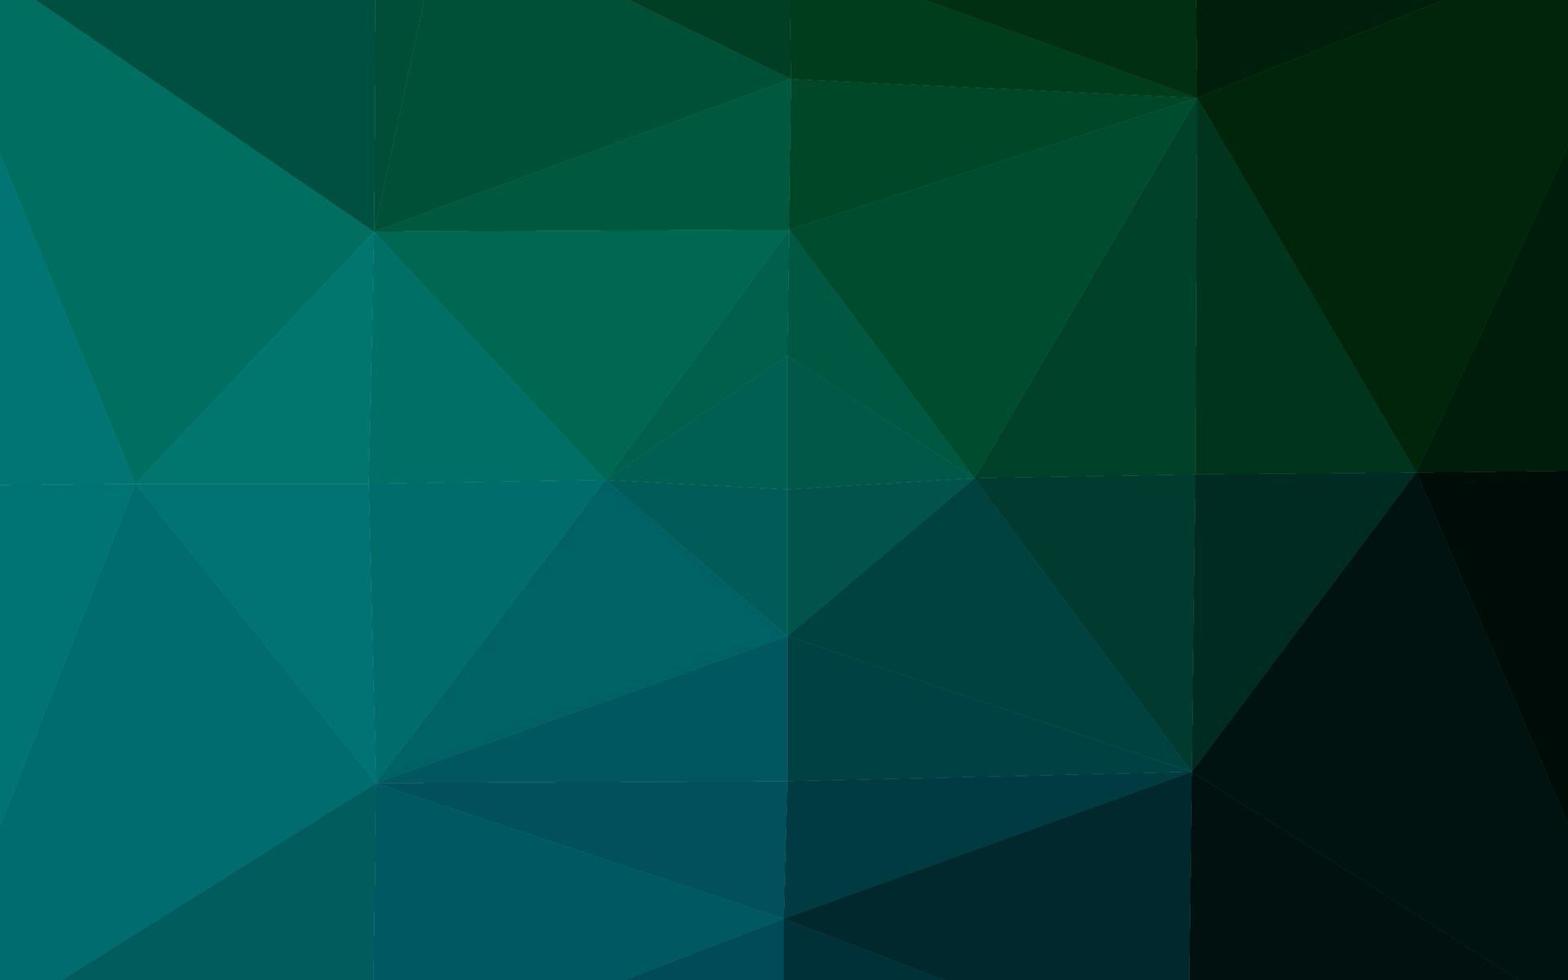 dunkelblaue, grüne vektorglänzende dreieckige Vorlage. vektor